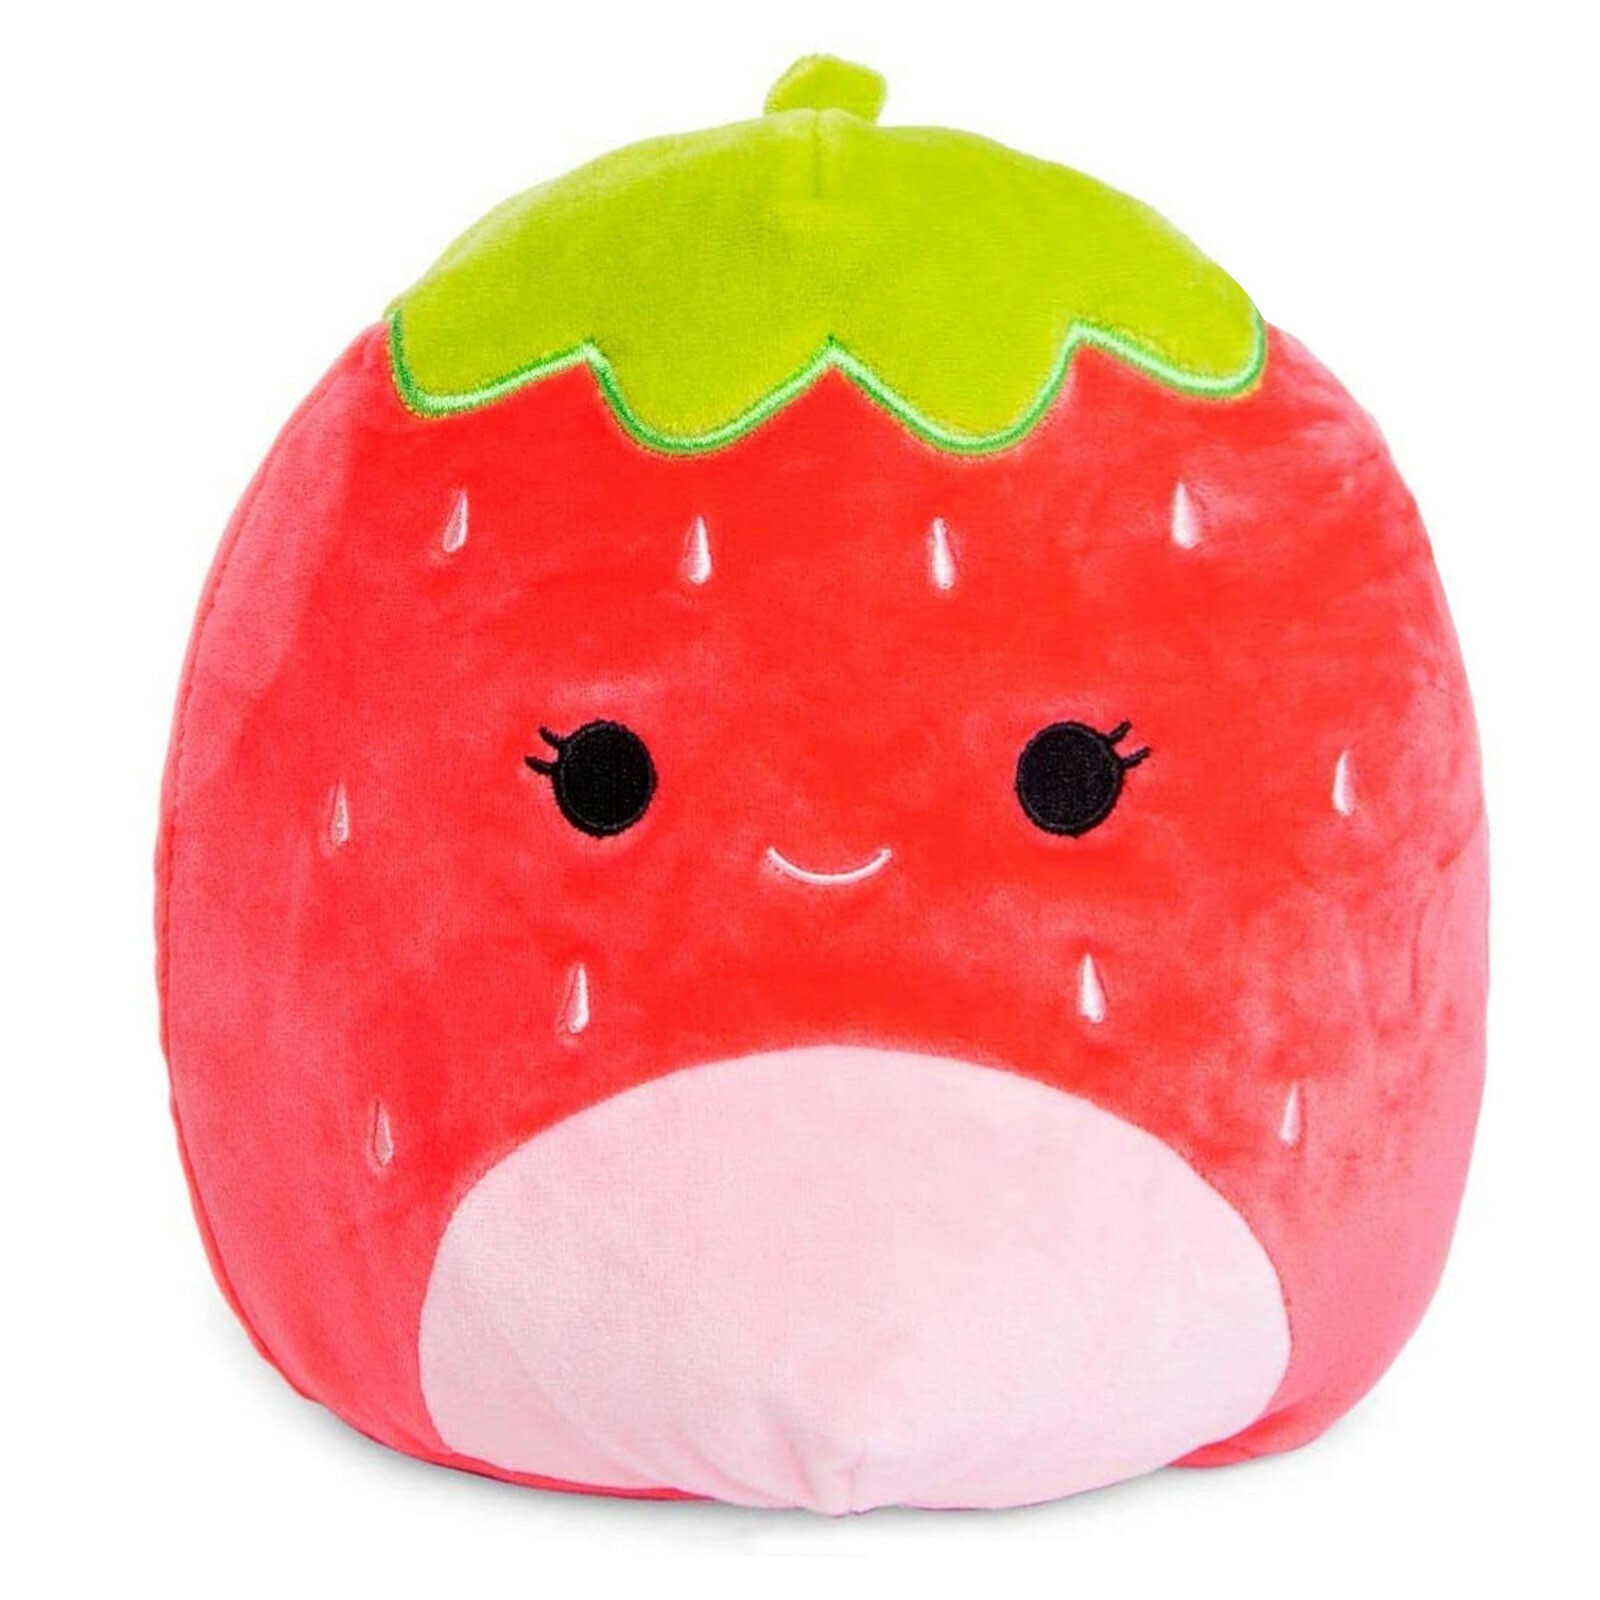 Fruit Plushies 8 Inch 3D Strawberry Plush Toy Pillow - Perfect Birthday Gift & Sofa Decor